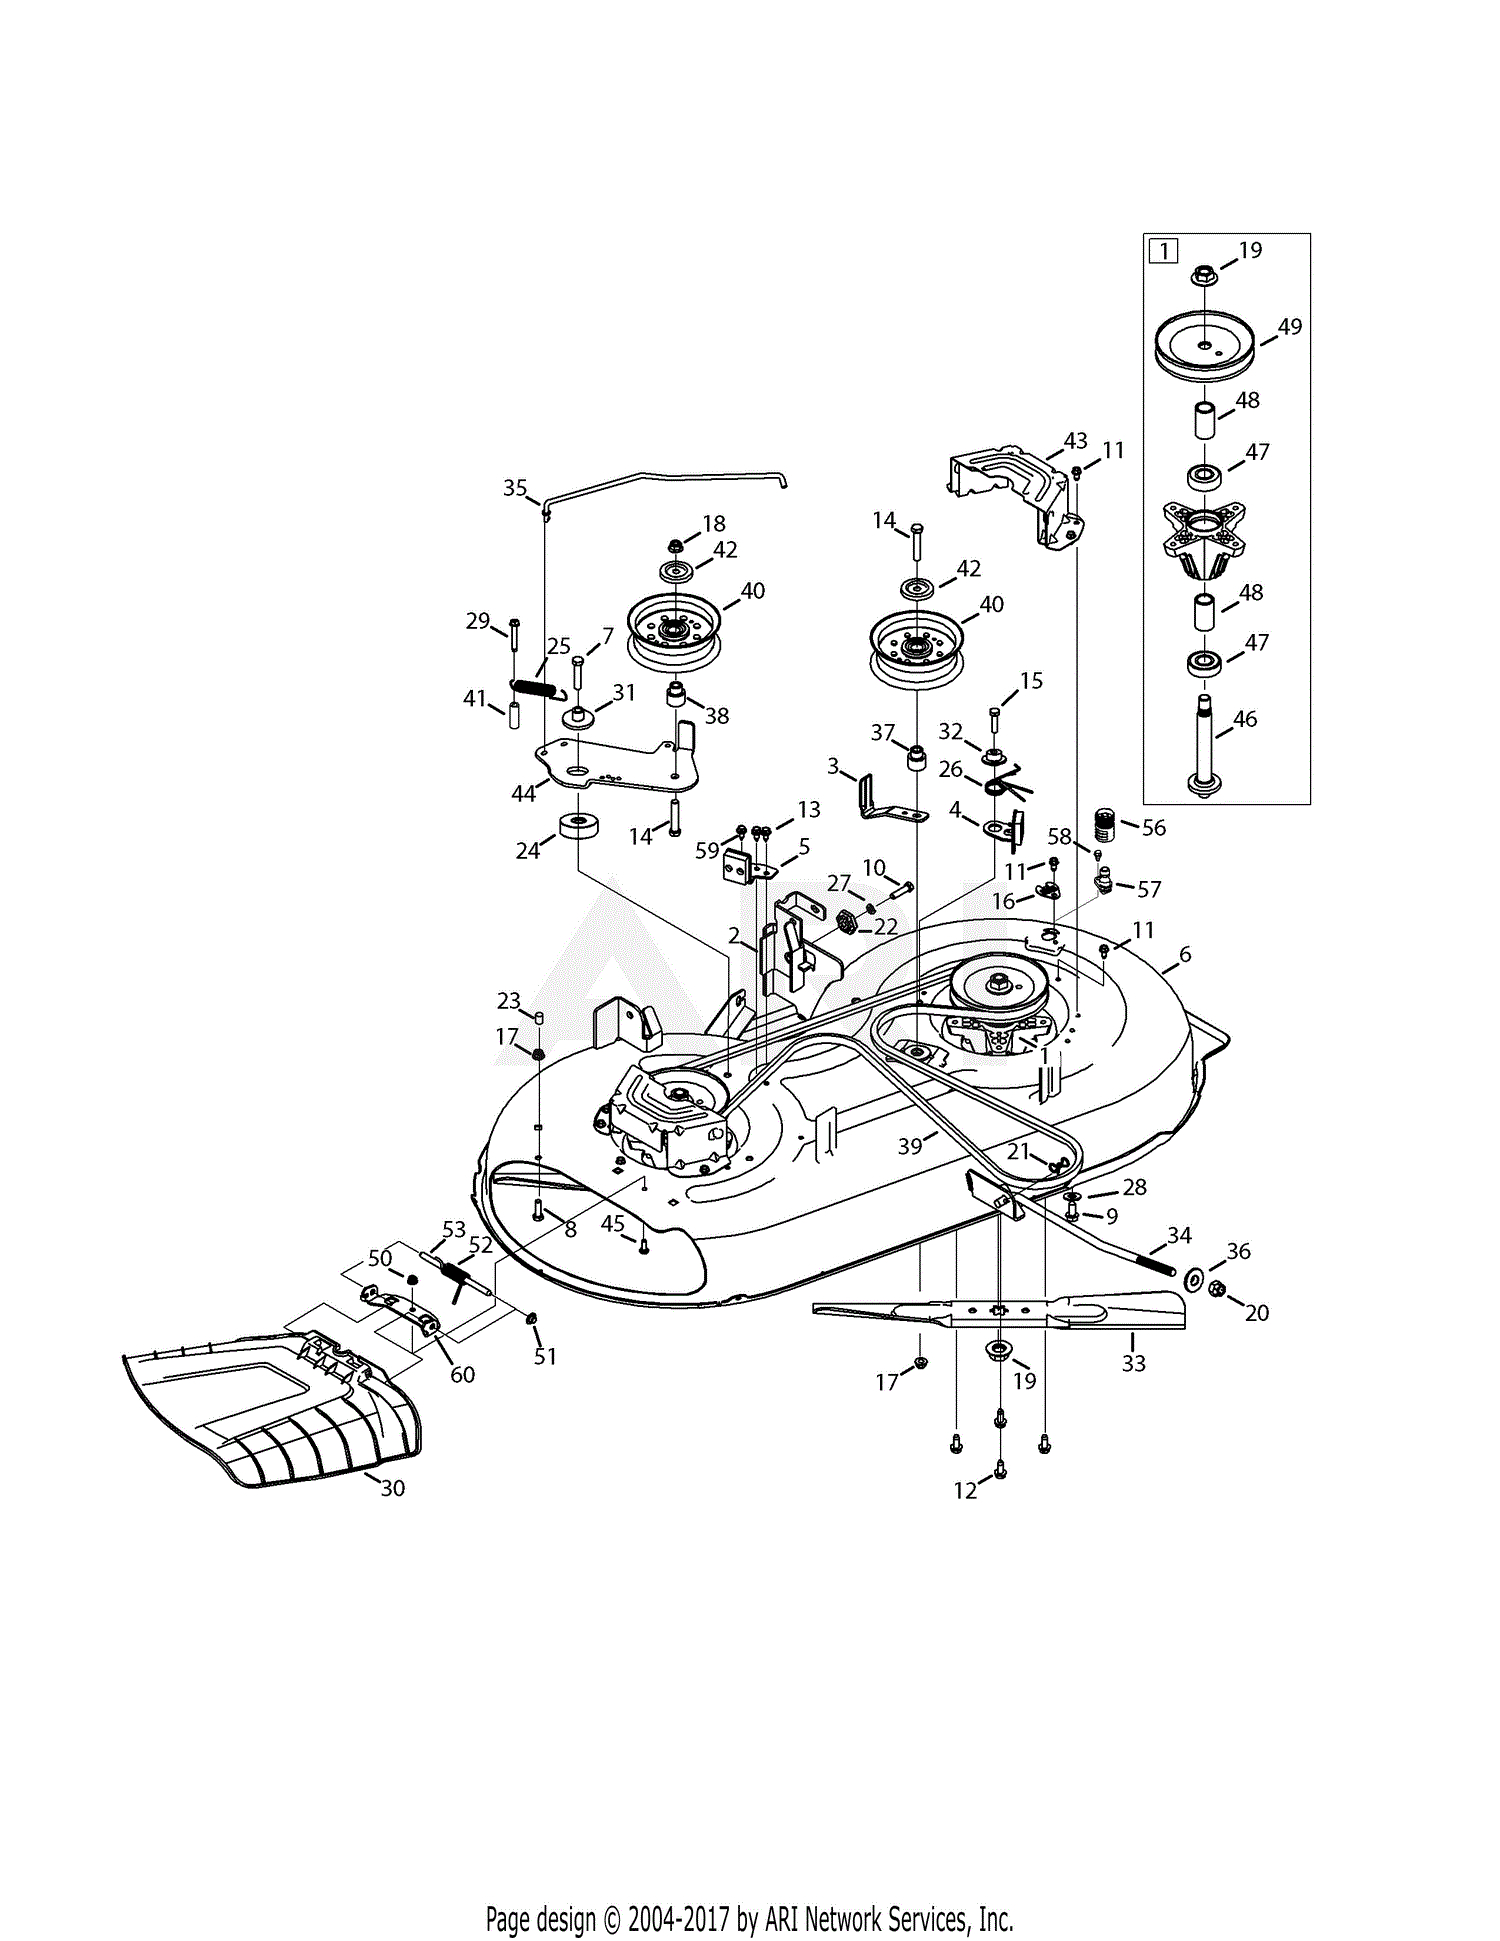 Huskee Lawn Mower Parts Diagram Huskee Riding Mower Belt Diagram Wiring Diagram Library